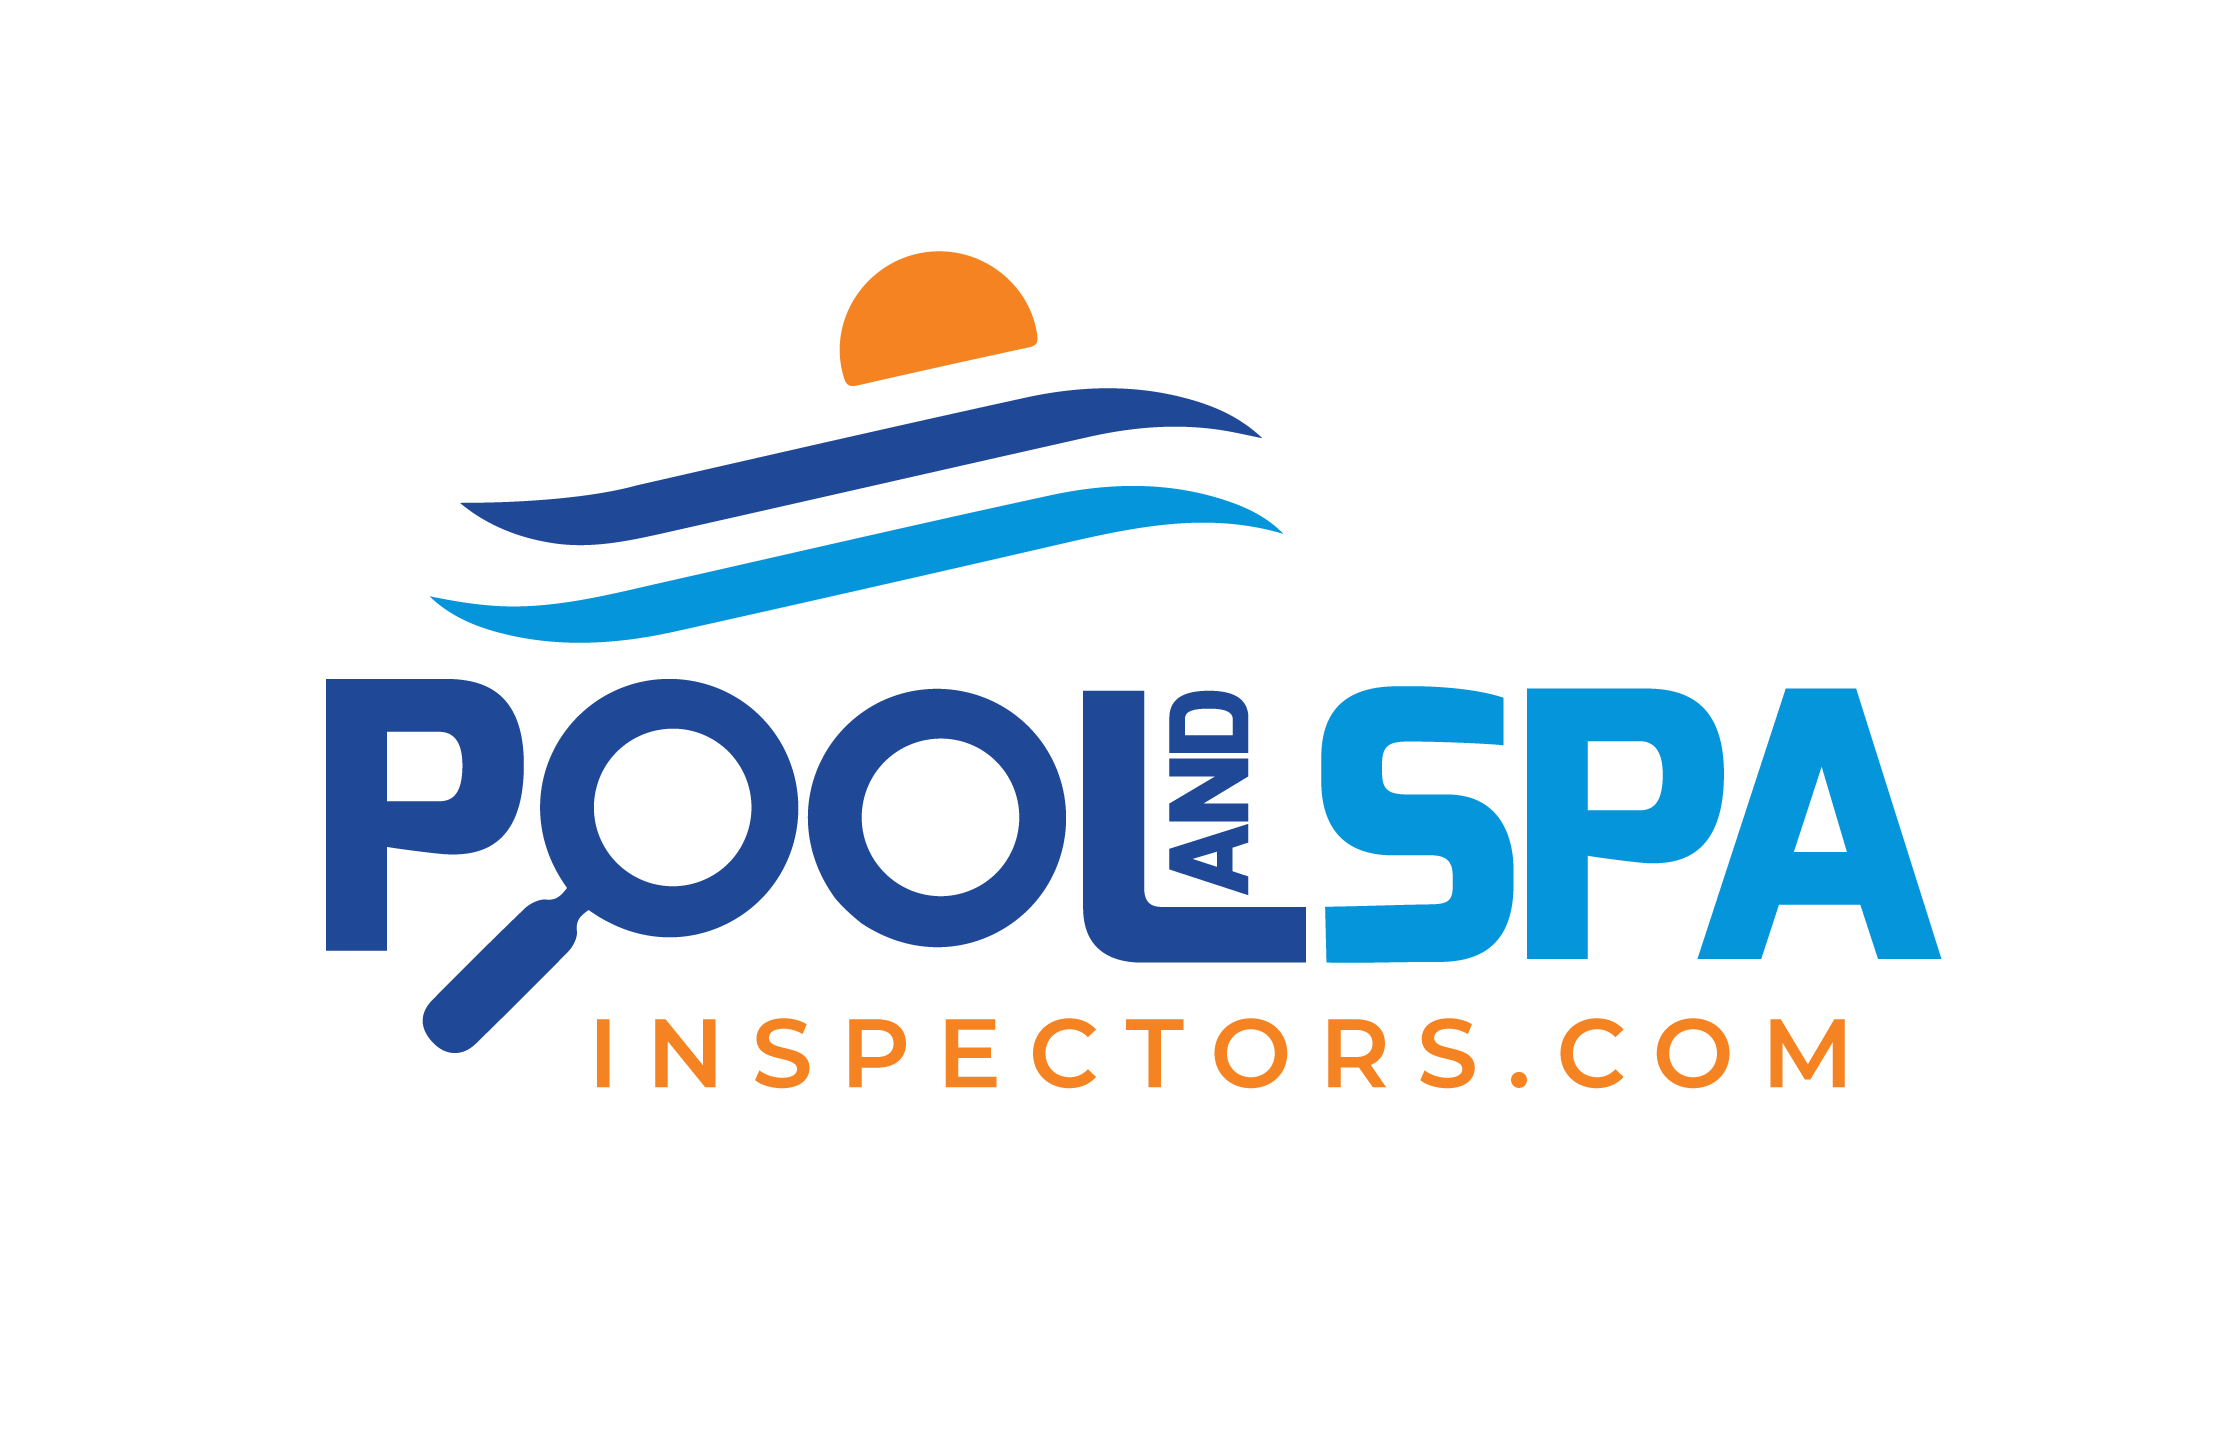 Pool & Spa Inspectors COMING SPRING 2022